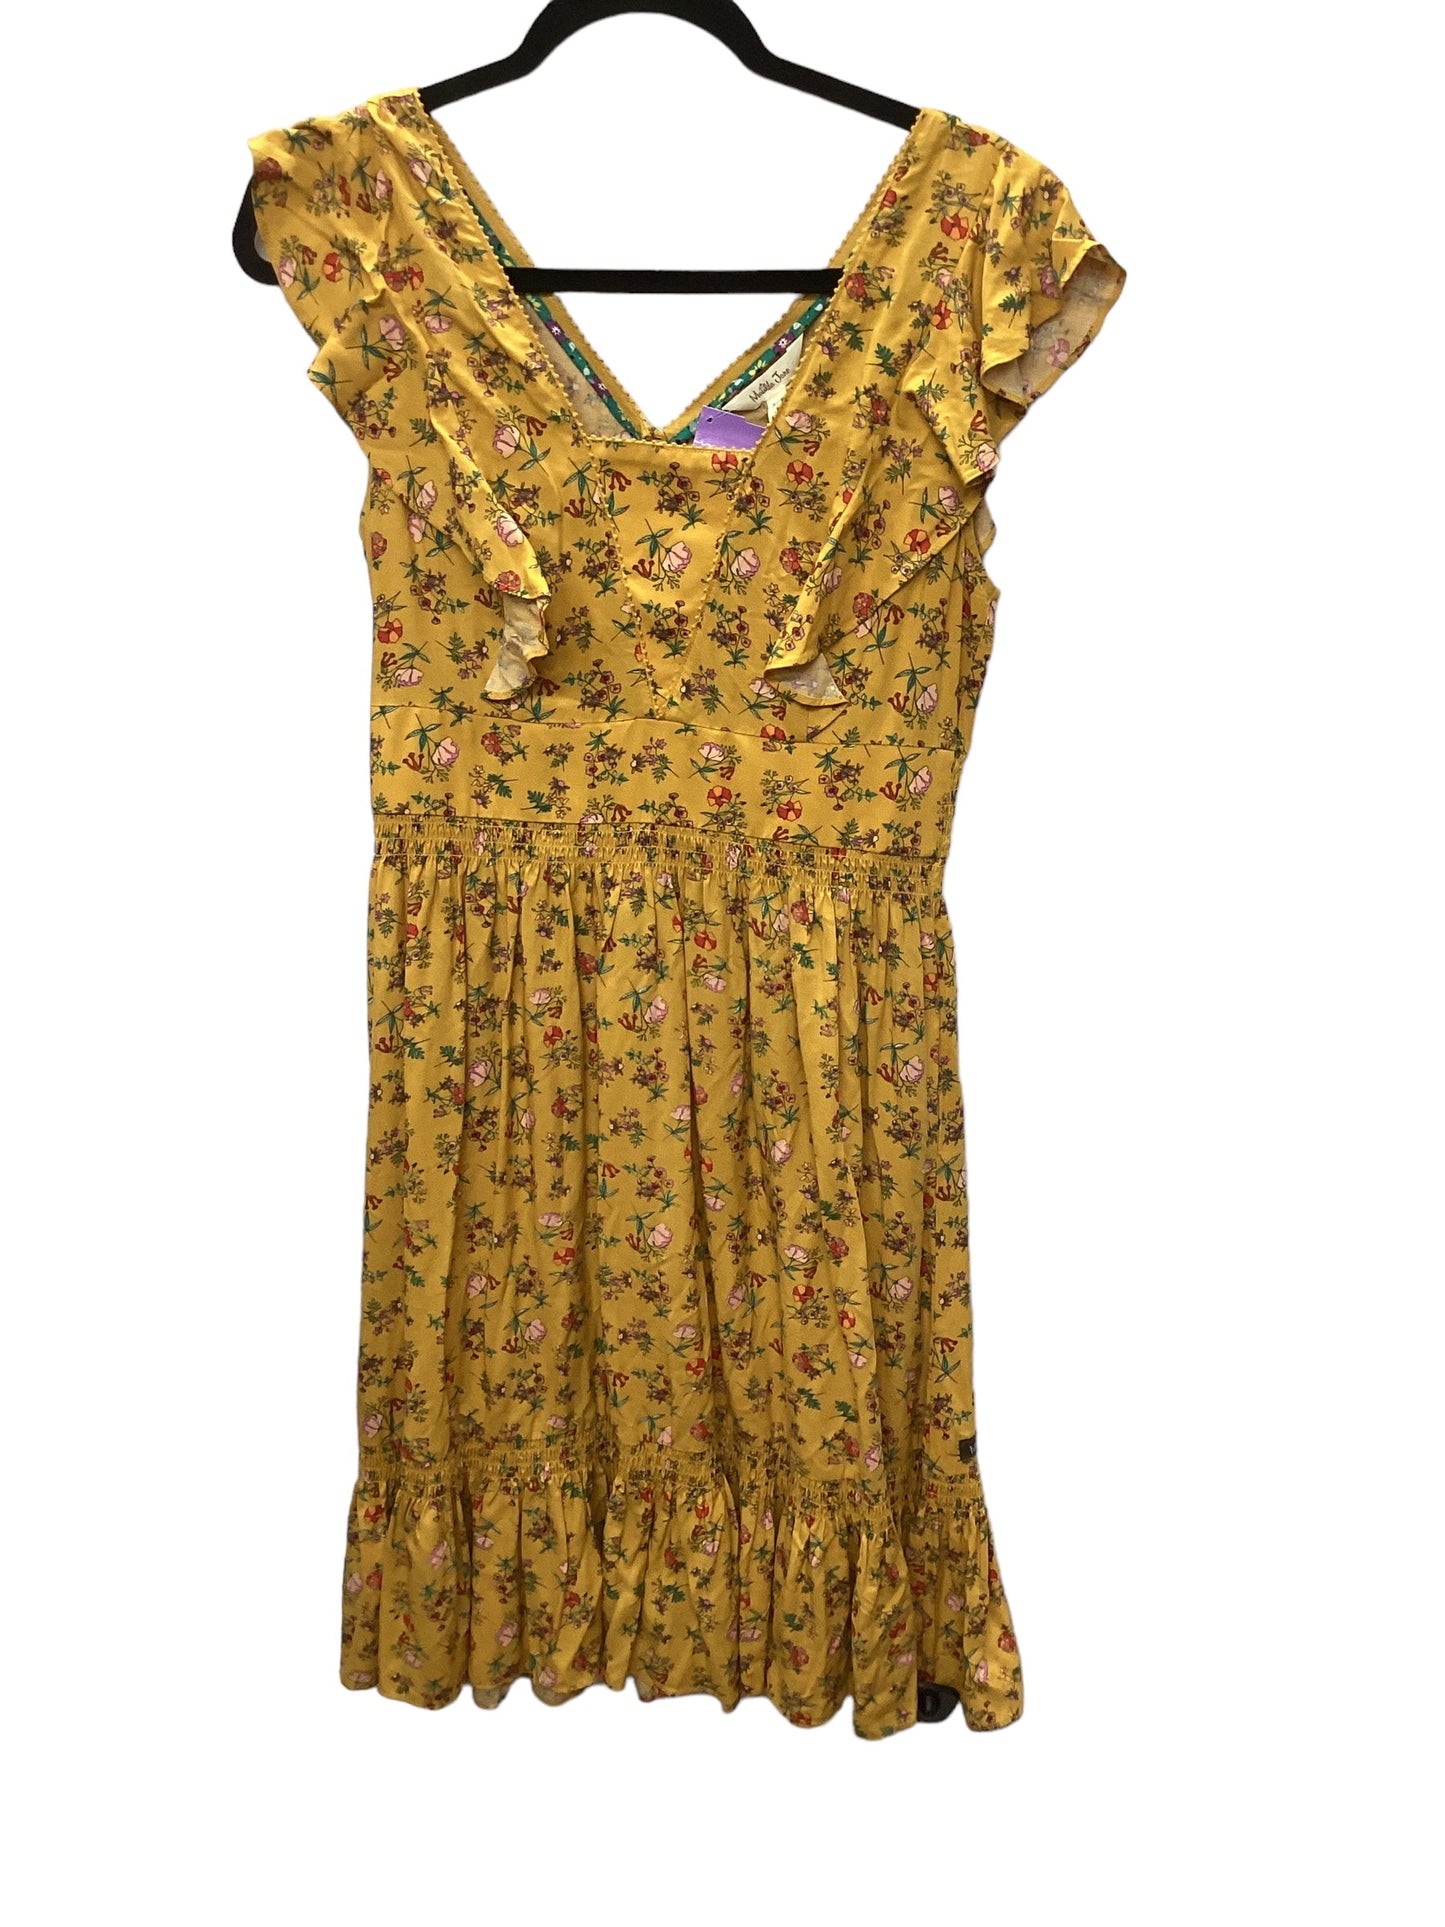 Yellow Dress Casual Short Matilda Jane, Size S